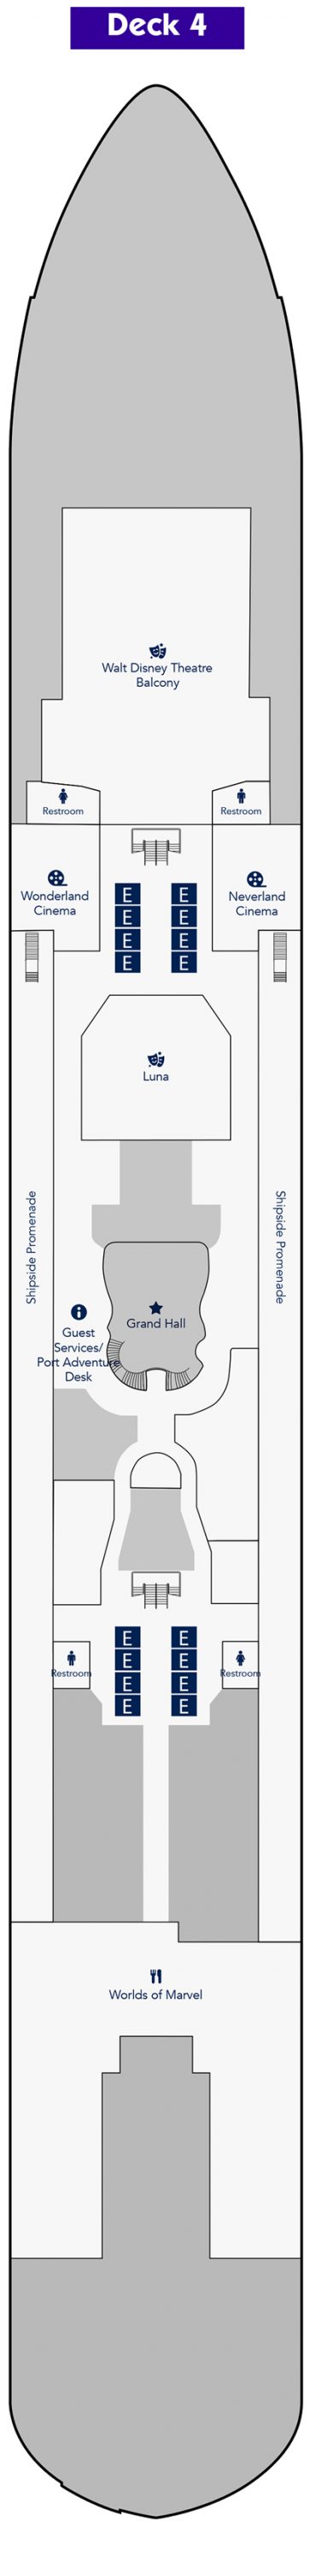 disney cruise ship floor plan